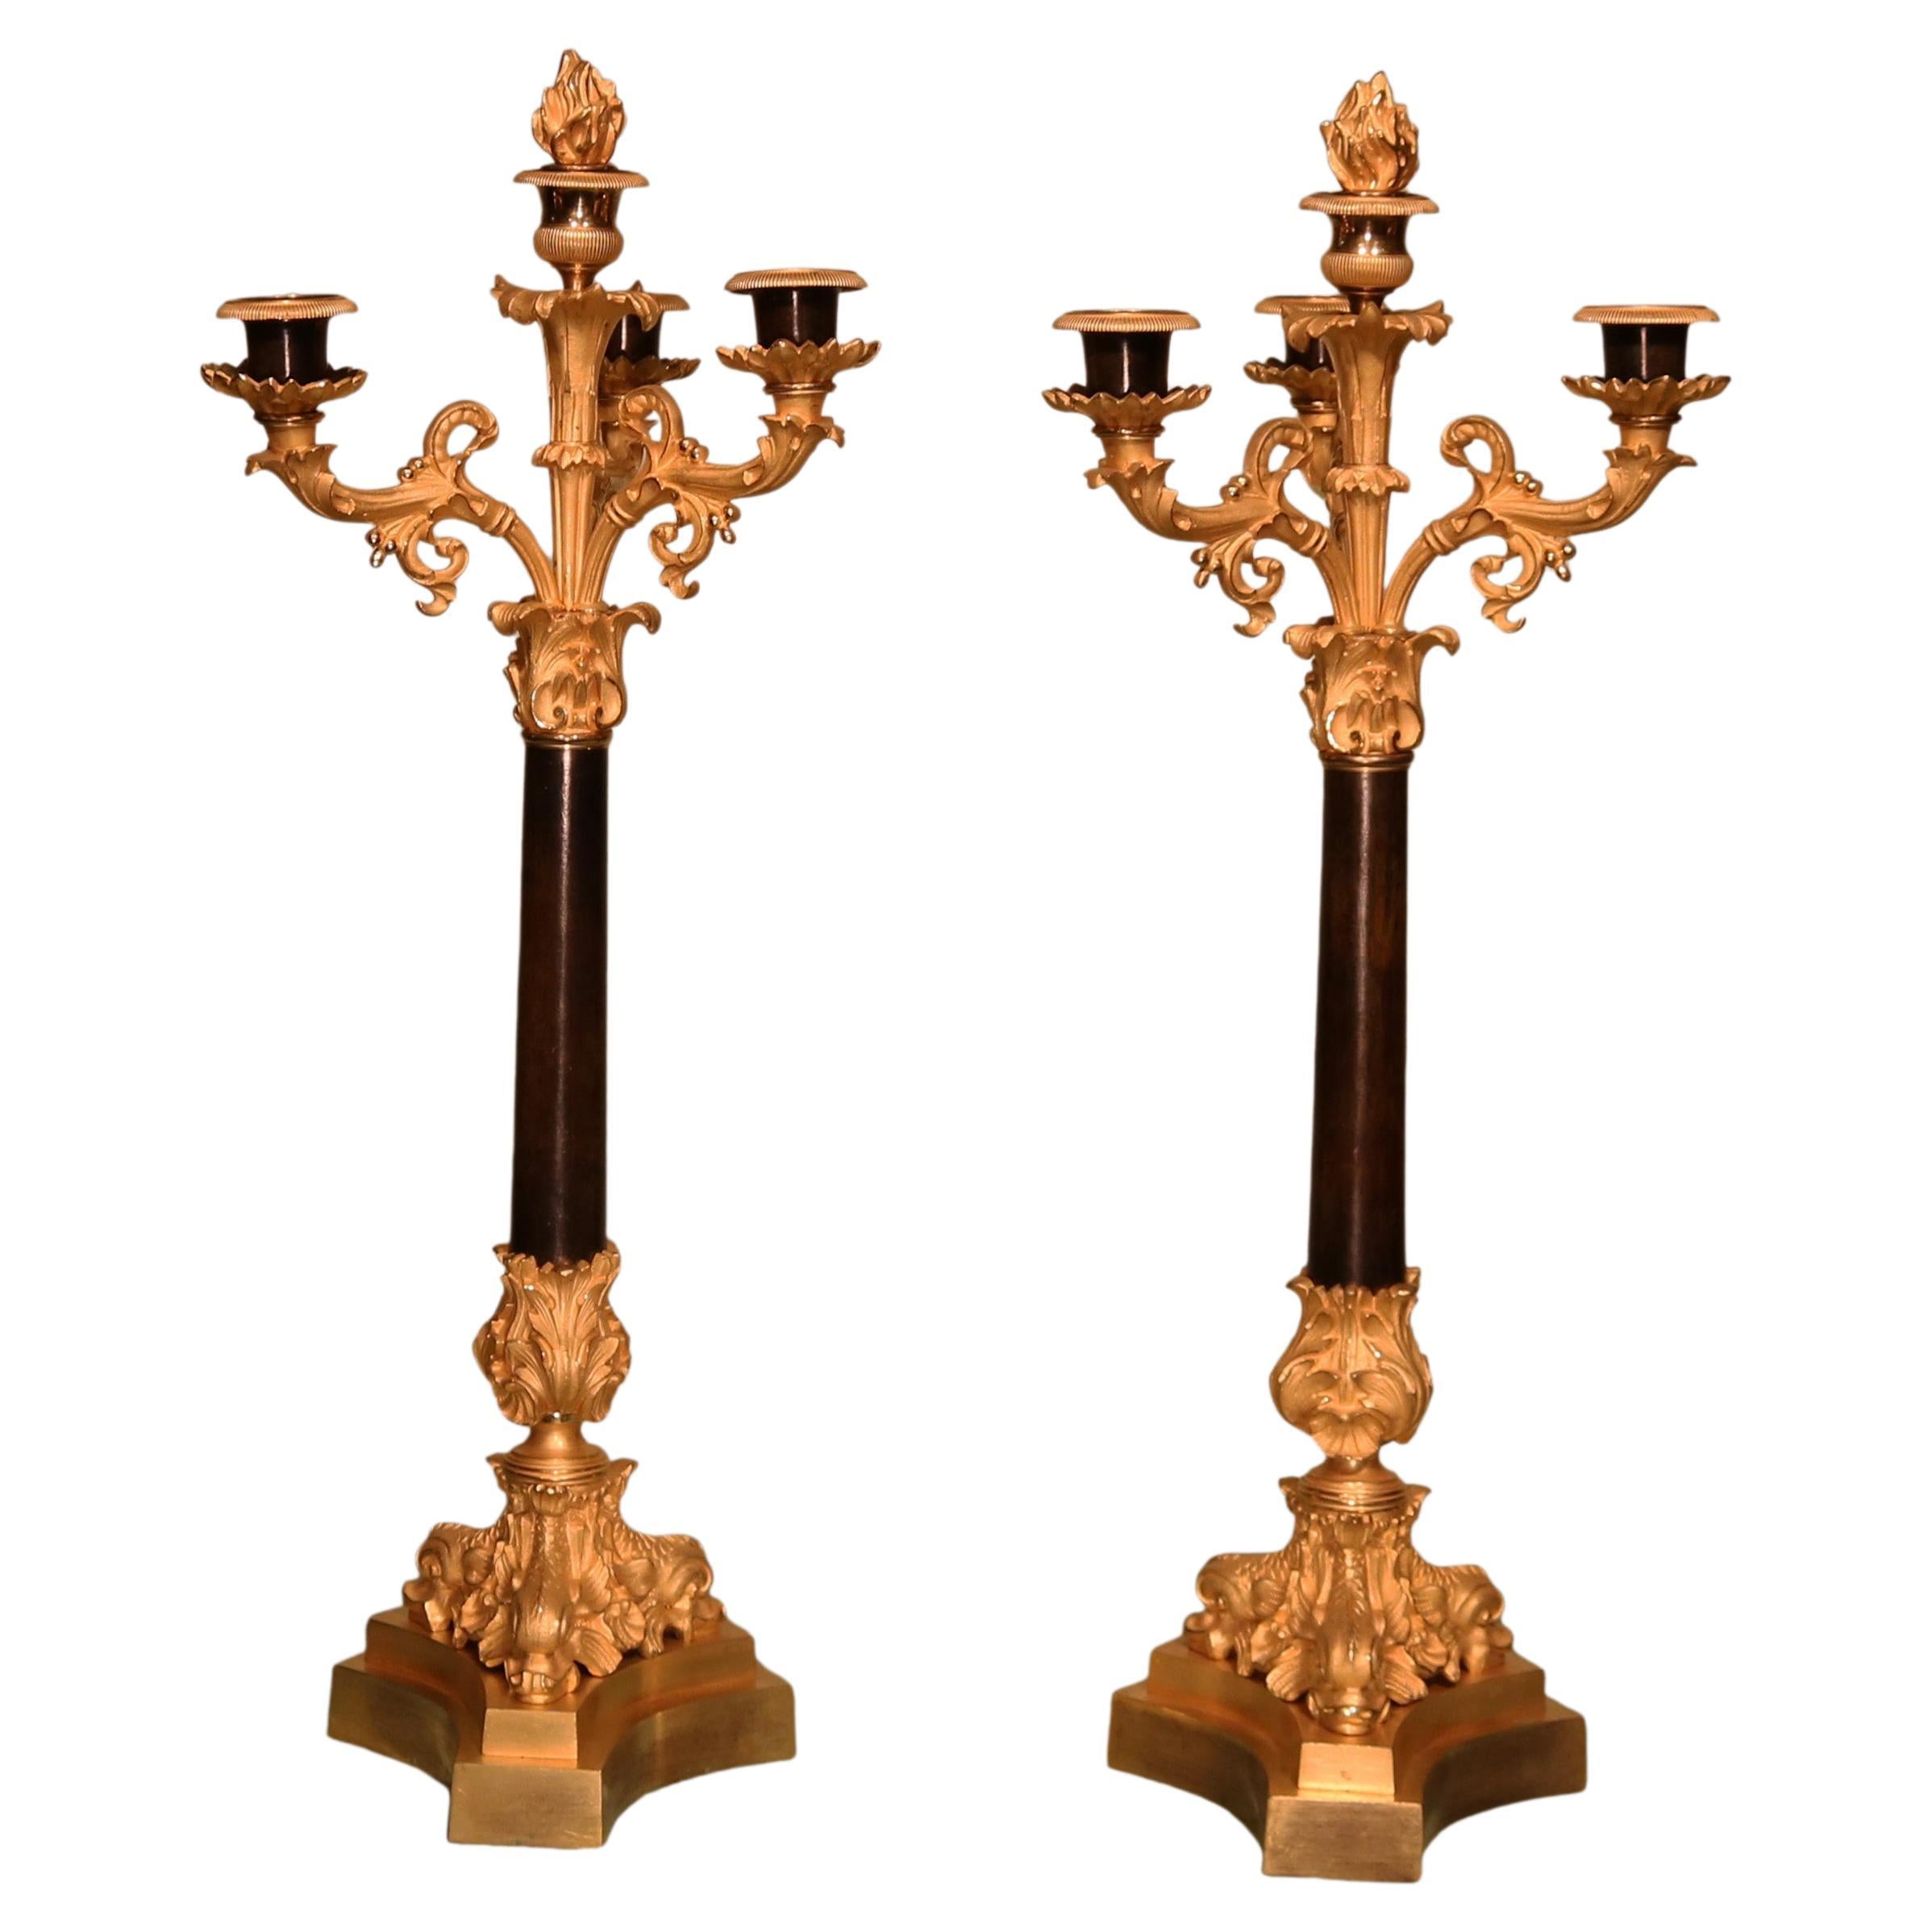 A fine pair of 19th century bronze and ormolu 4 light candelabra